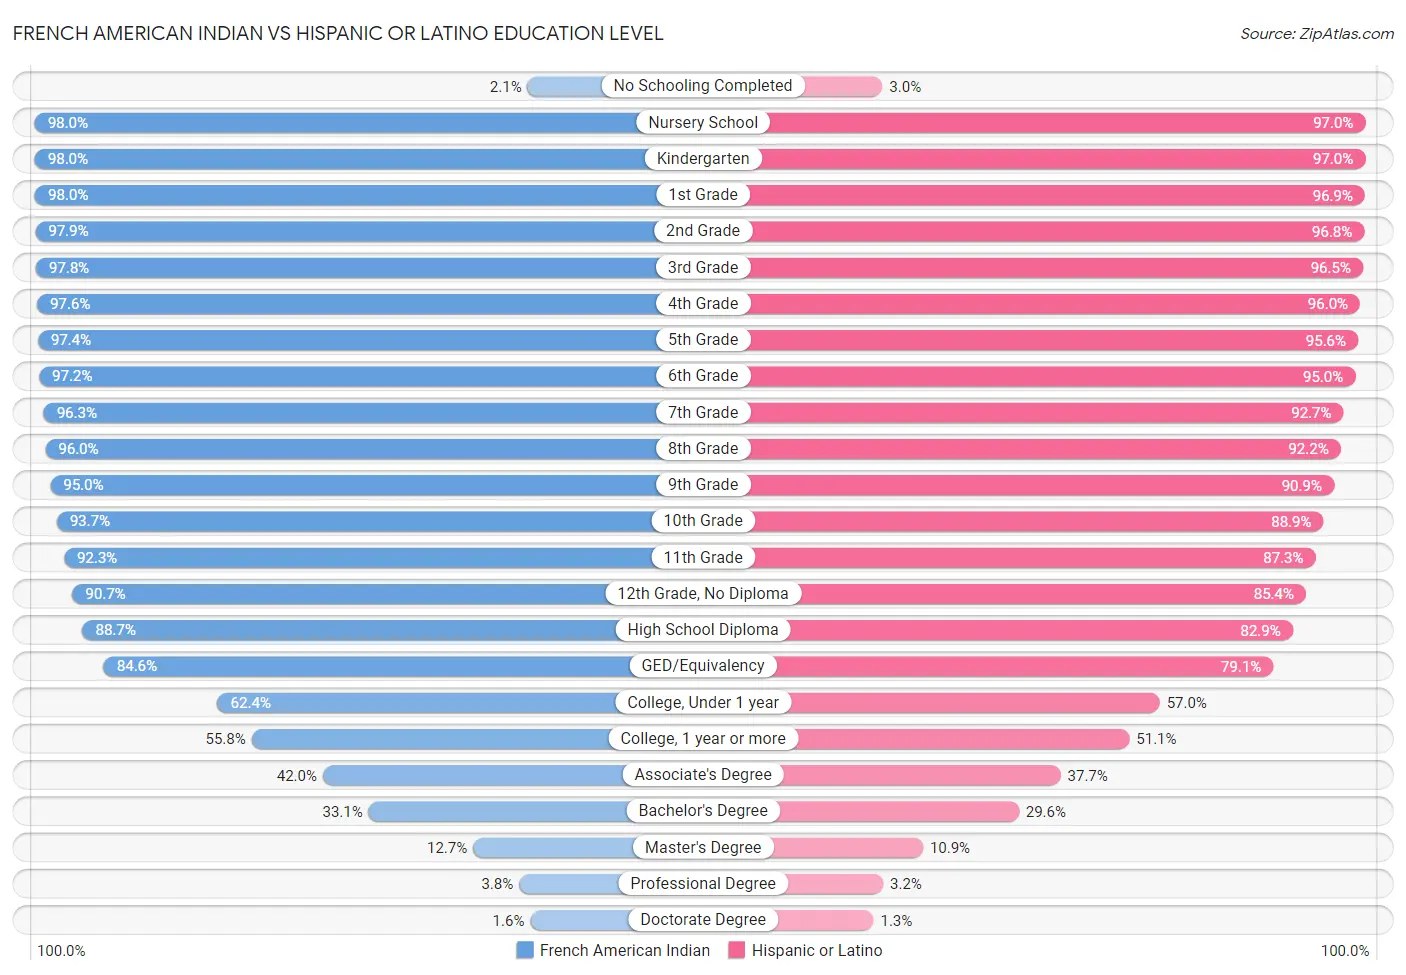 French American Indian vs Hispanic or Latino Education Level